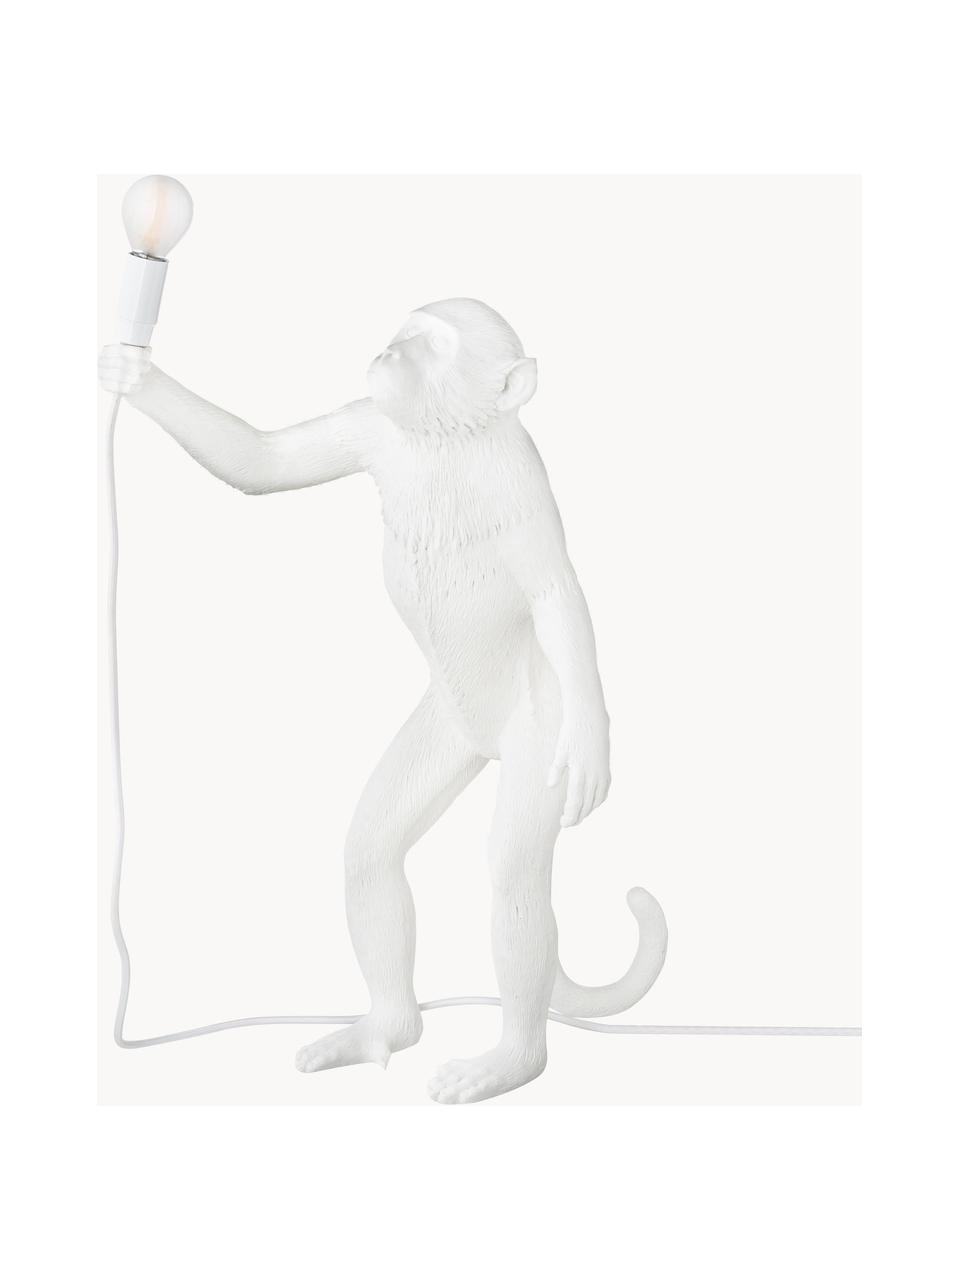 Grande lampe à poser design Monkey, Blanc, larg. 46 x haut. 54 cm